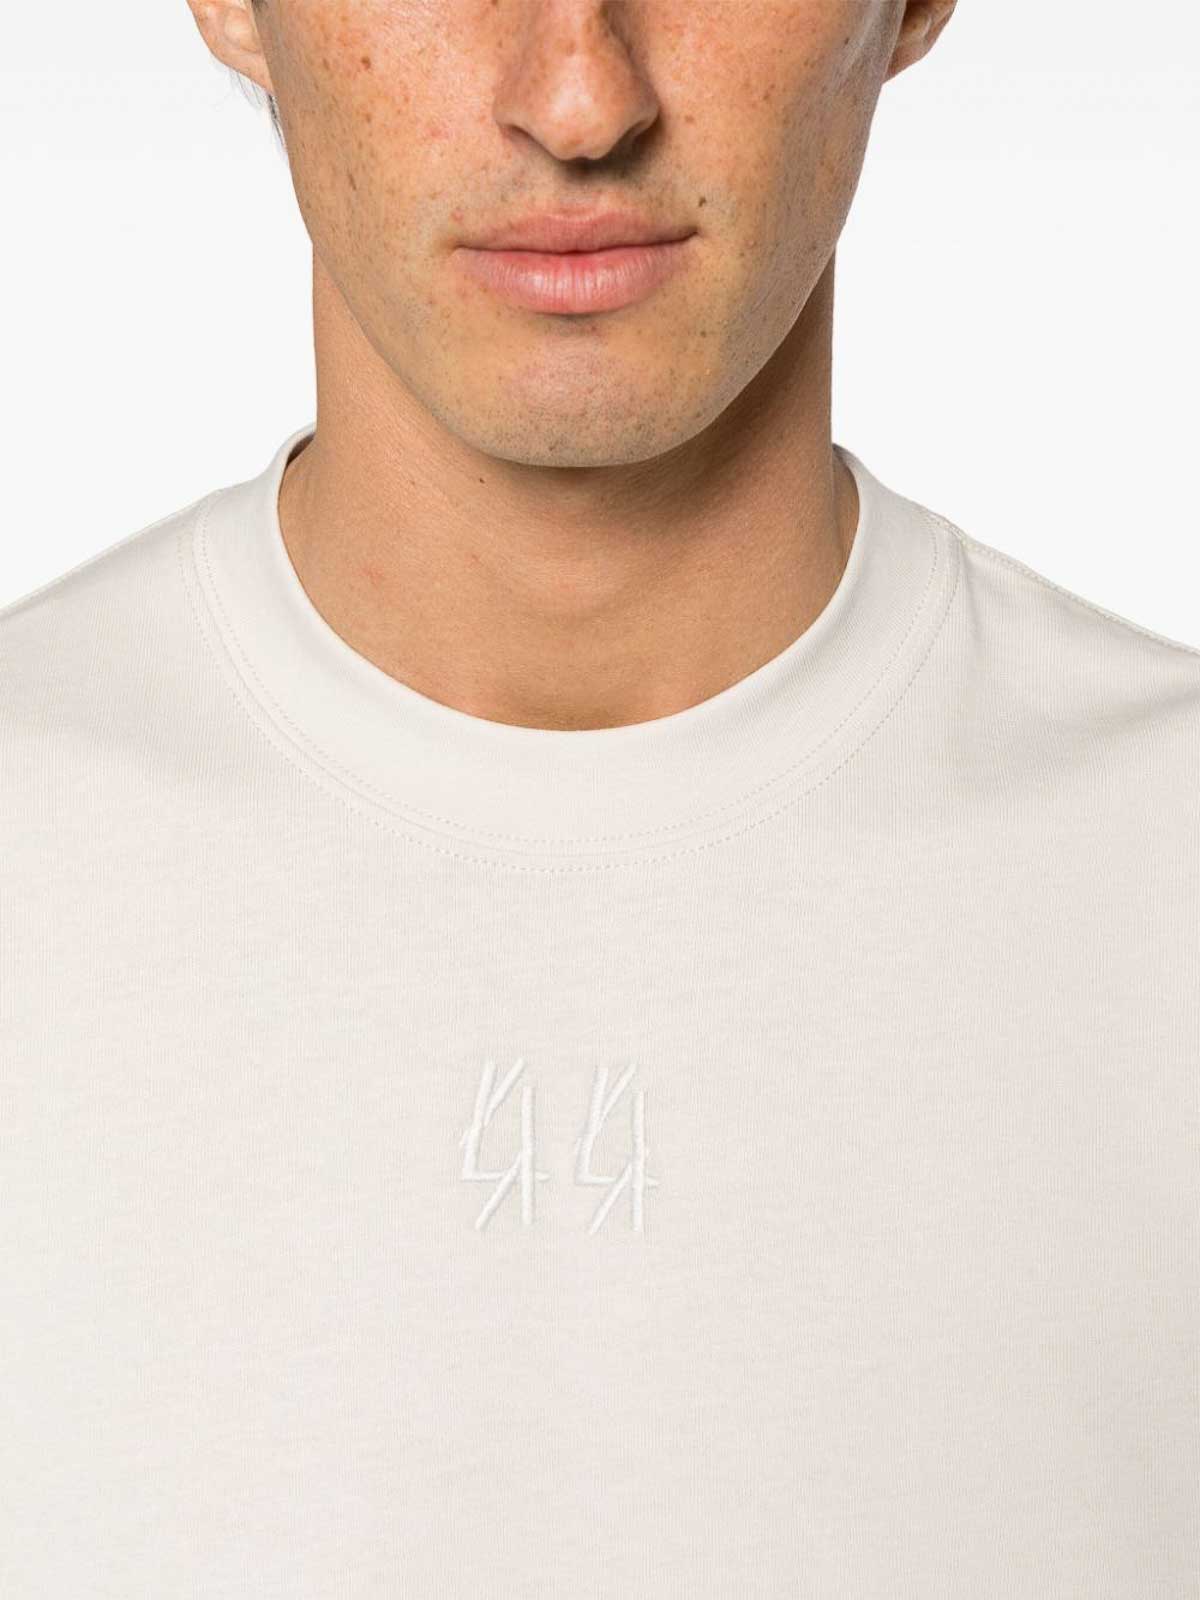 Shop 44 Label Group Camiseta - Blanco In White